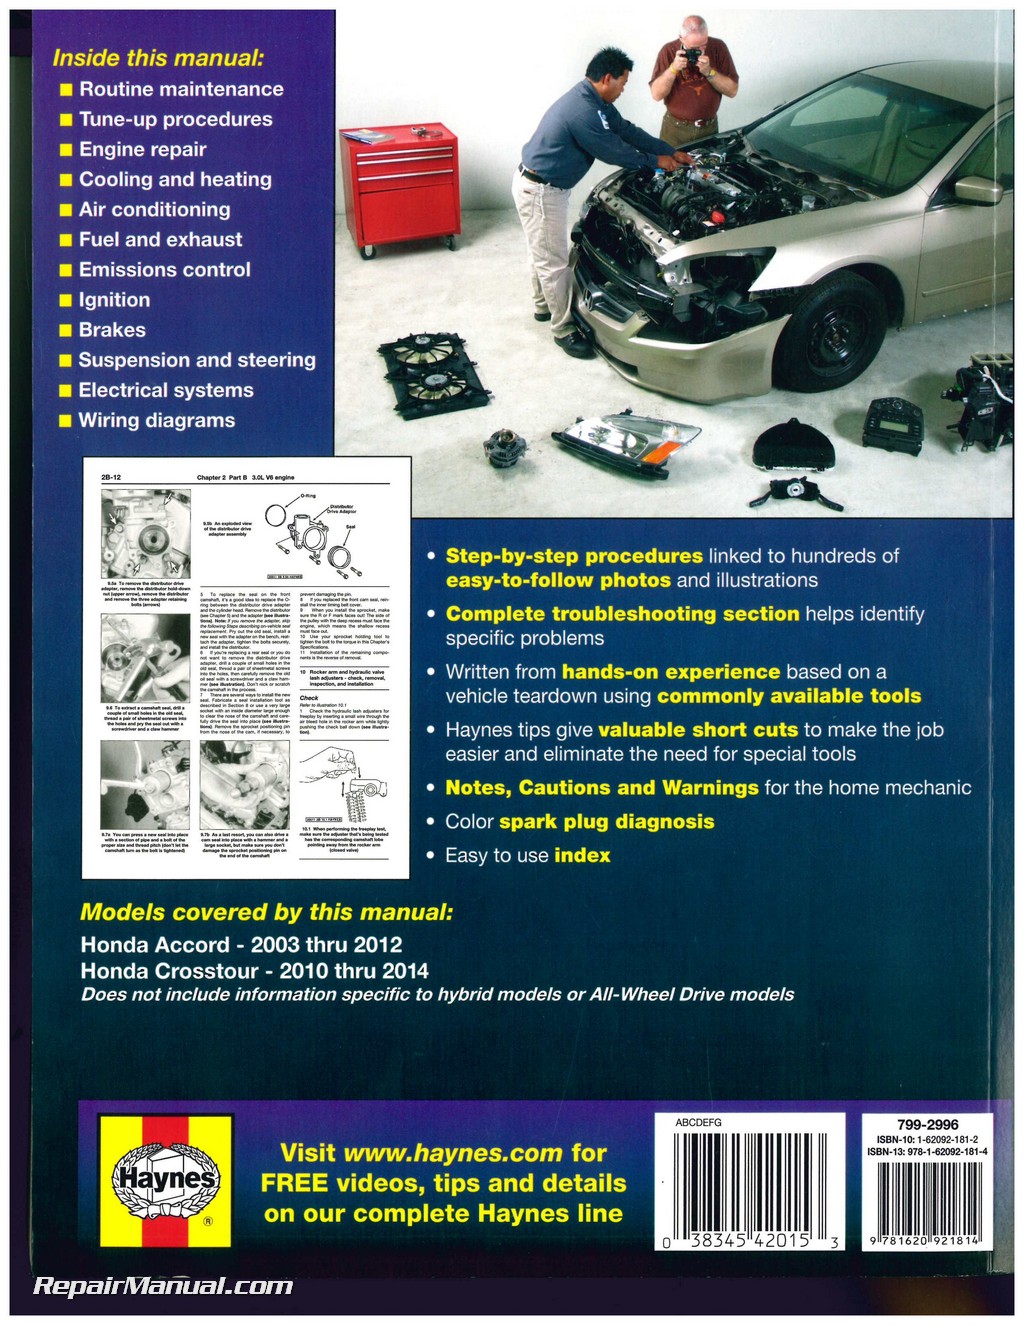 1992 Honda Accord Haynes Manual Pdf Free Download - etabc